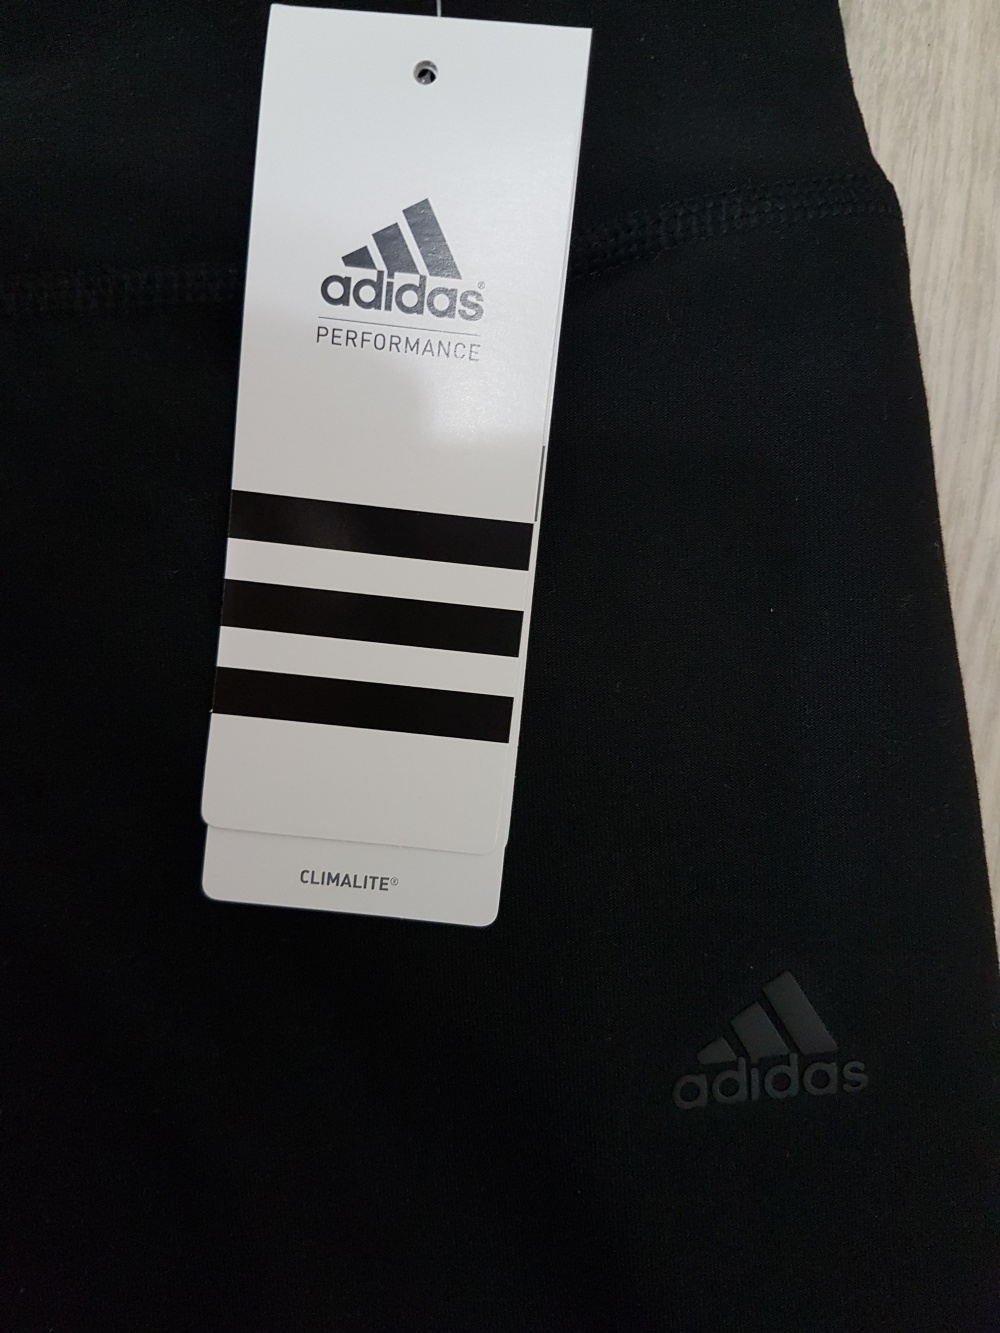 Adidas Perfomance брюки для спорта с технологией climalite, размер S